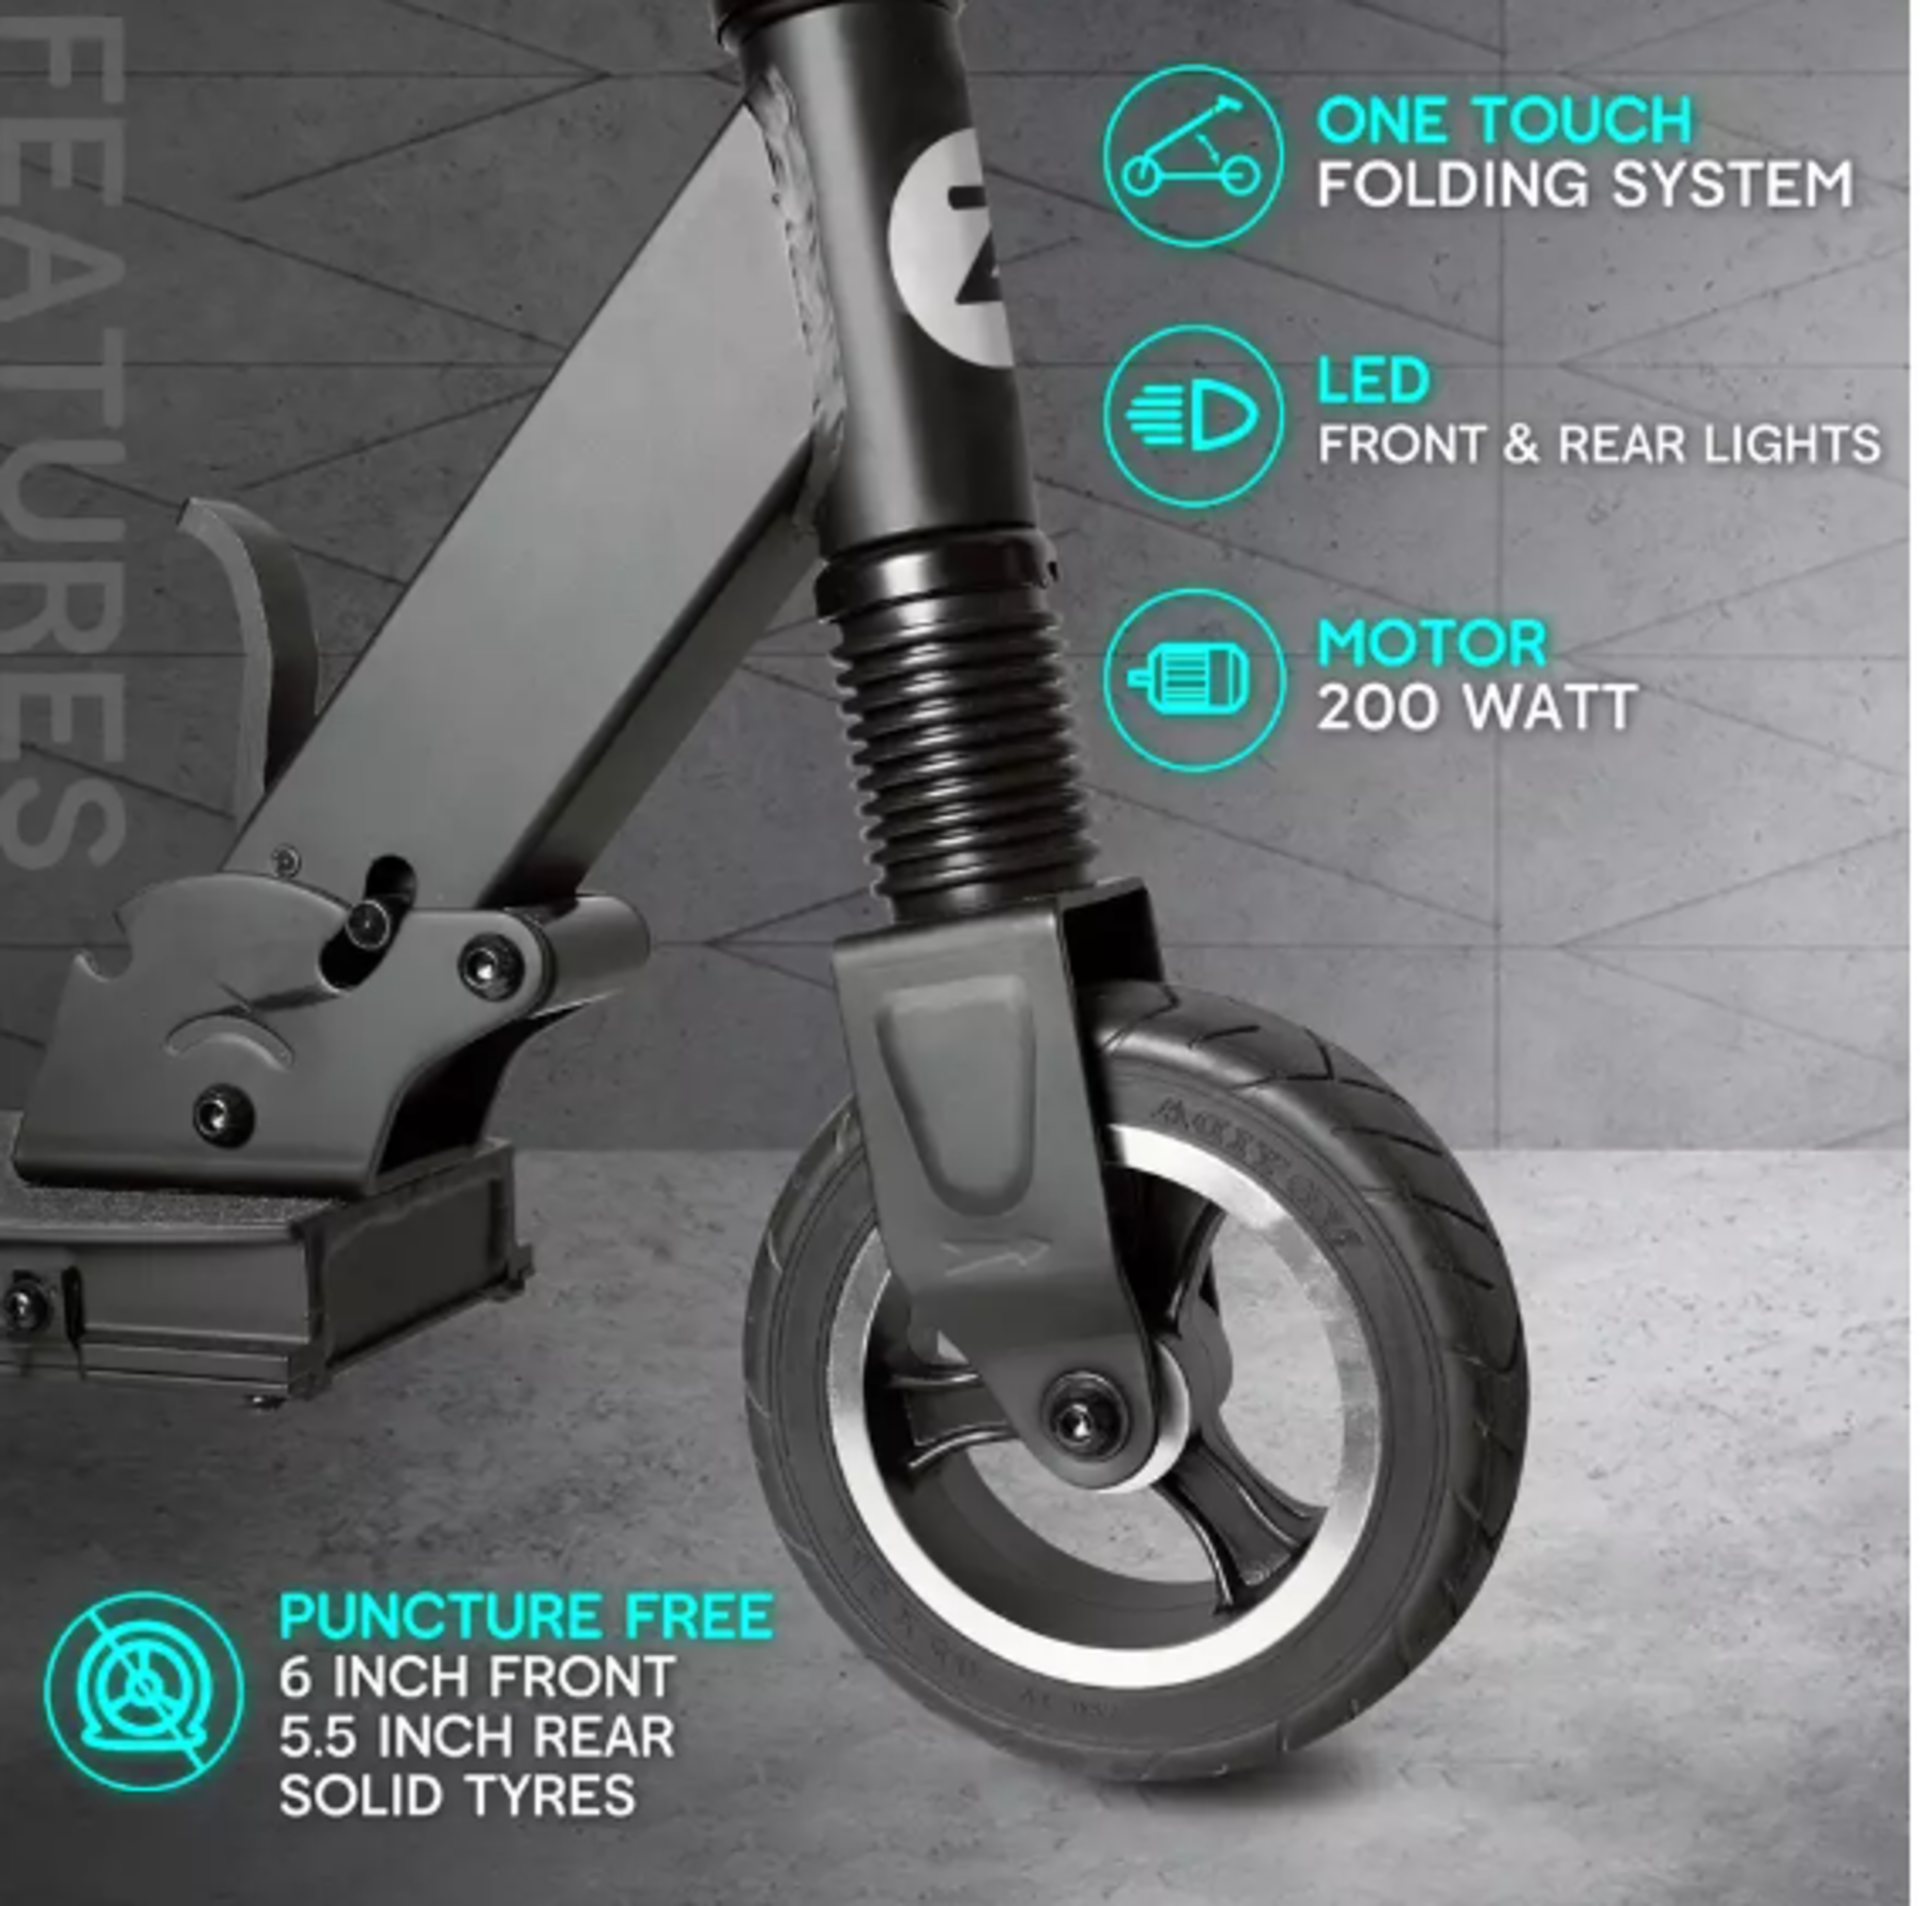 Zinc Flex Folding Electric Scooter. RRP £290.00. Introducing the Zinc Folding Electric Flex Scooter. - Image 3 of 3